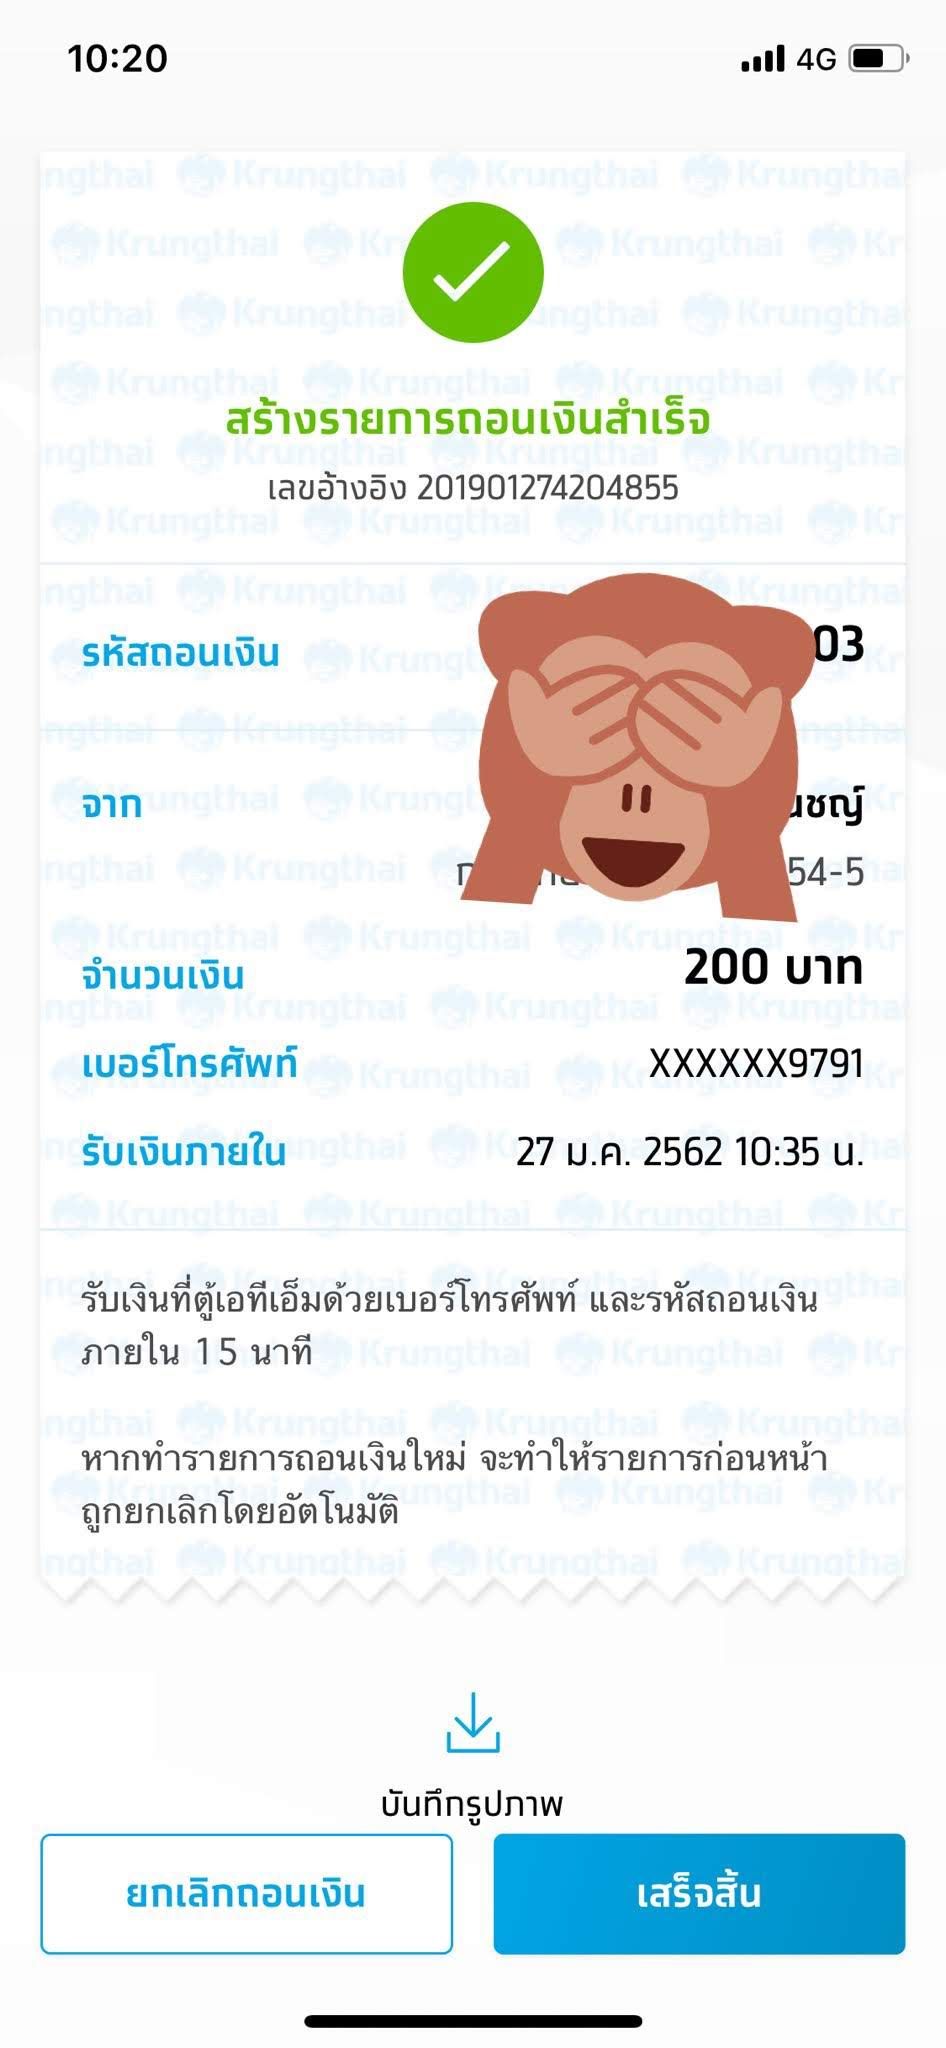 Krungthai NEXT เปิดให้กดเงินไม่ต้องใช้บัตรแล้ว จบความยุ่งยากจากการทำผ่านฟีเจอร์ e-Cheque